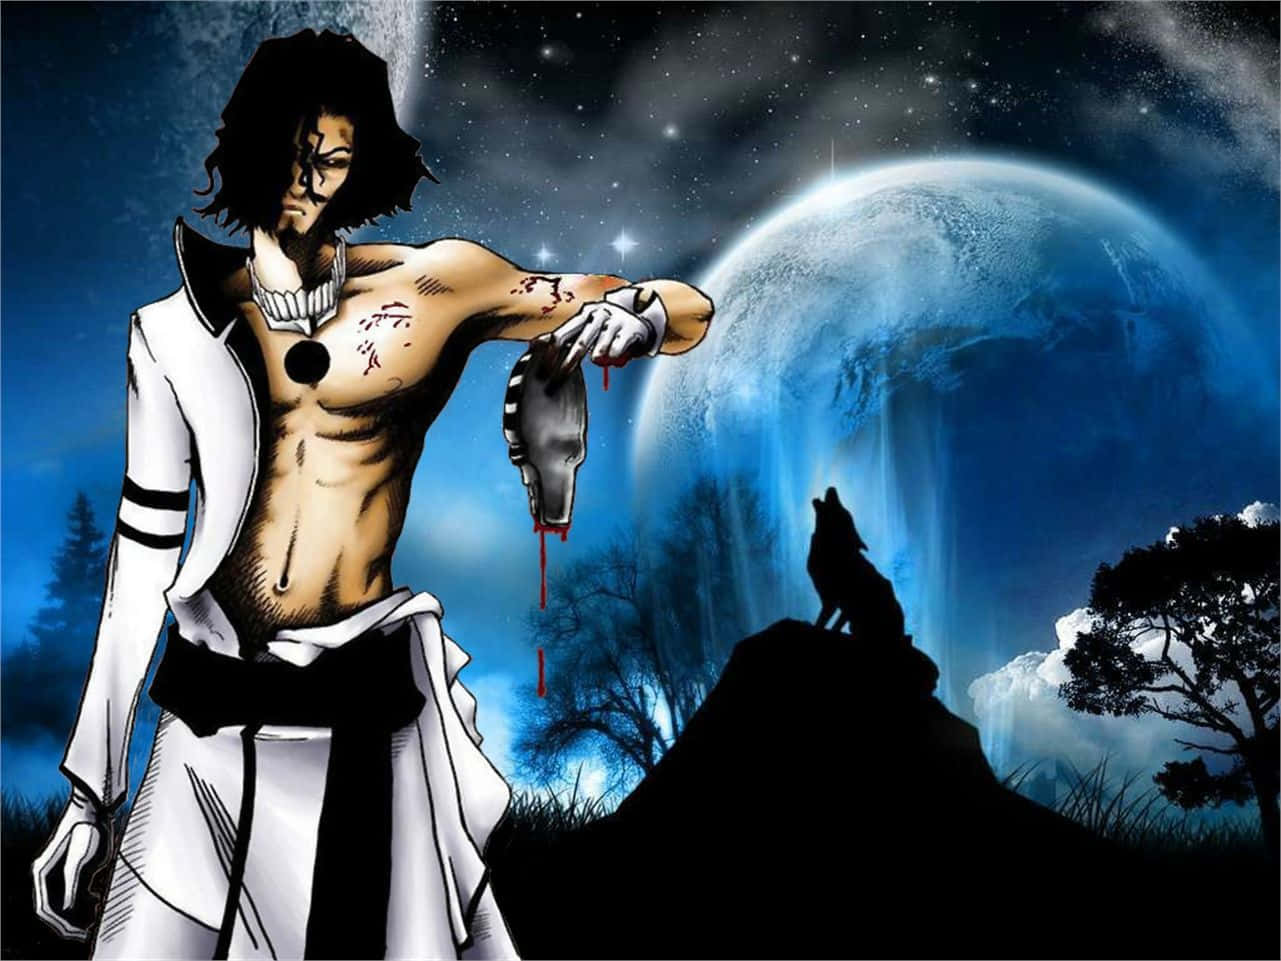 Coyote Starrk of the Espada- a powerful Arrancar in the anime bleach Wallpaper